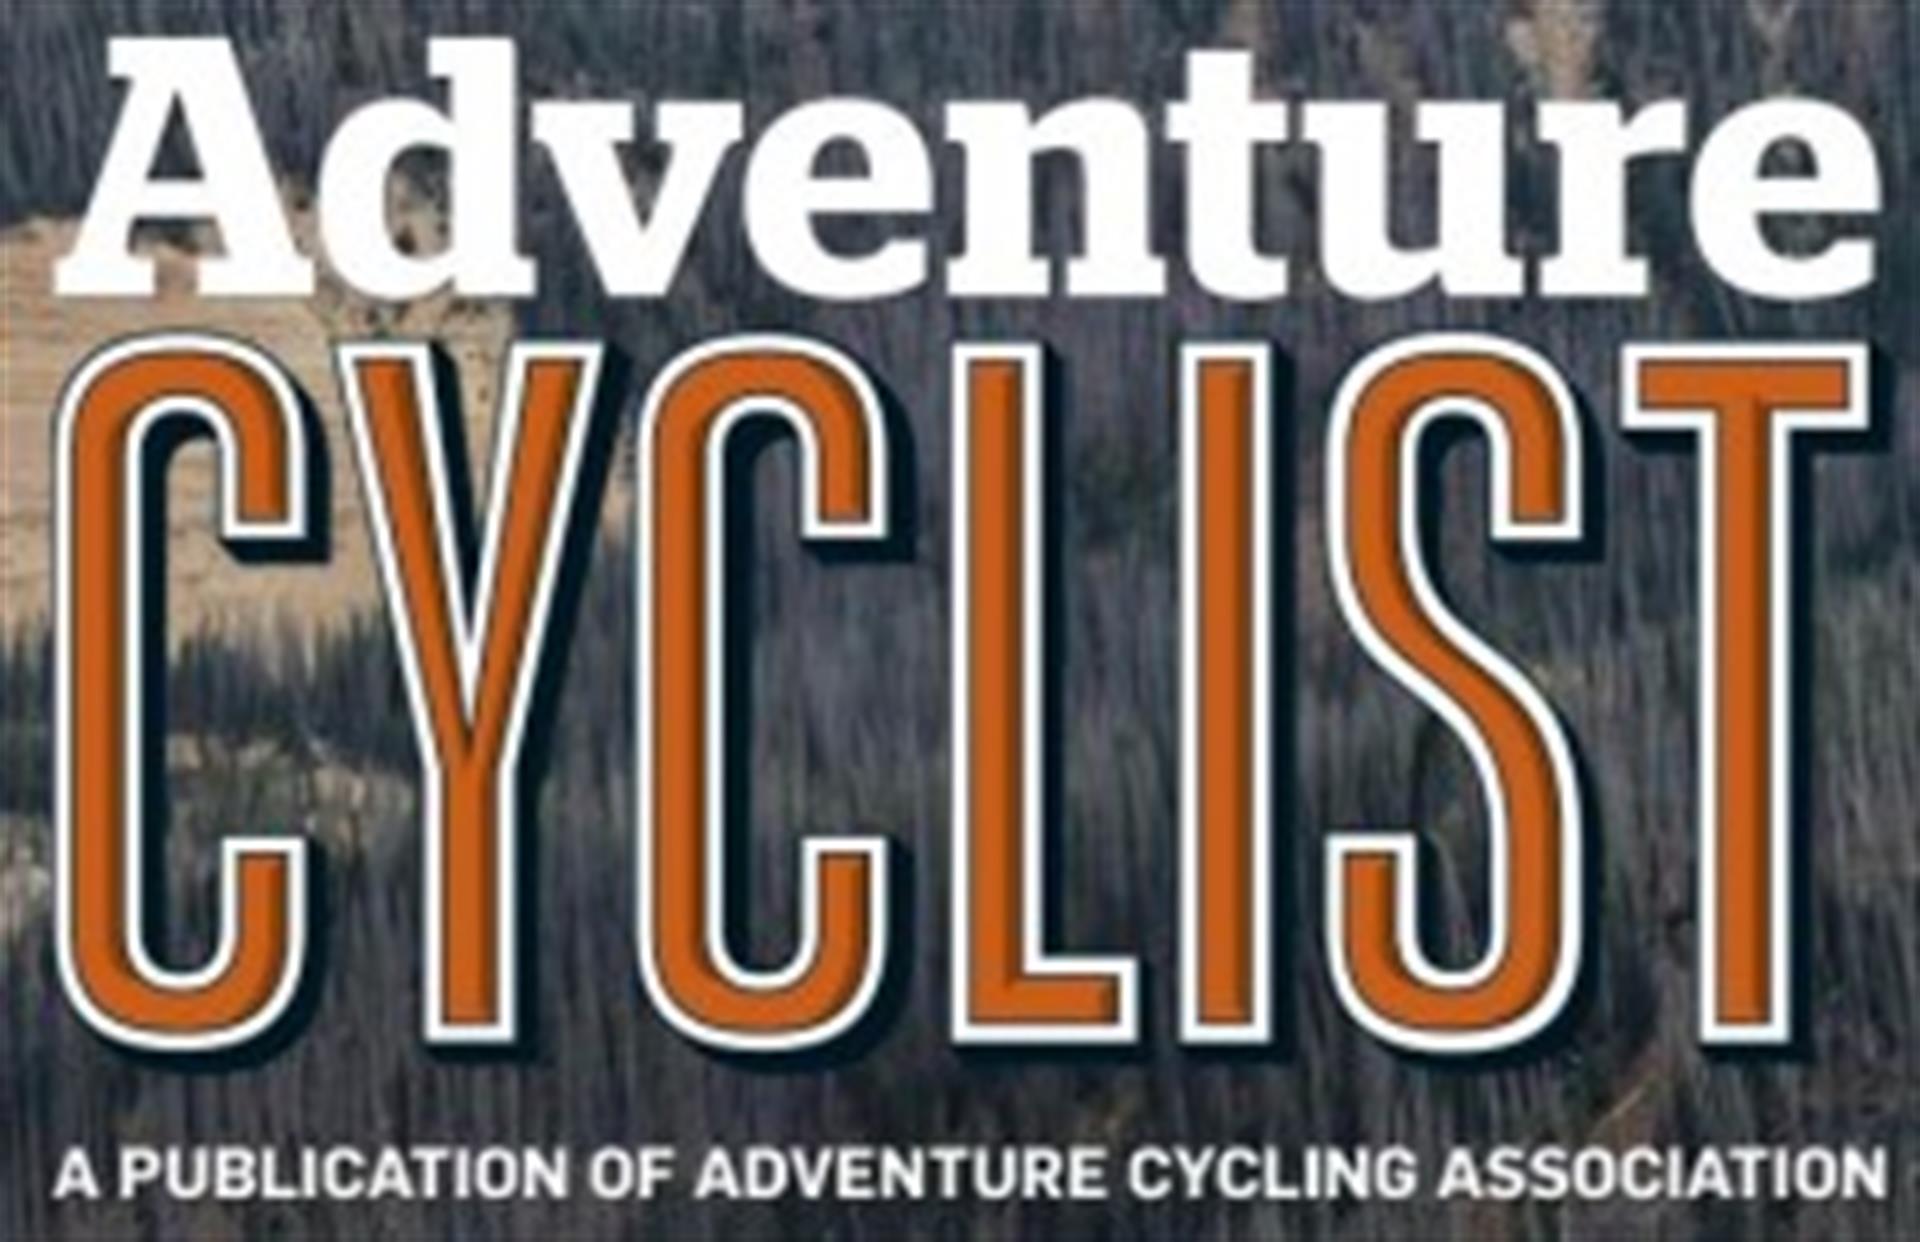 AdventureCyclistlogo300x194